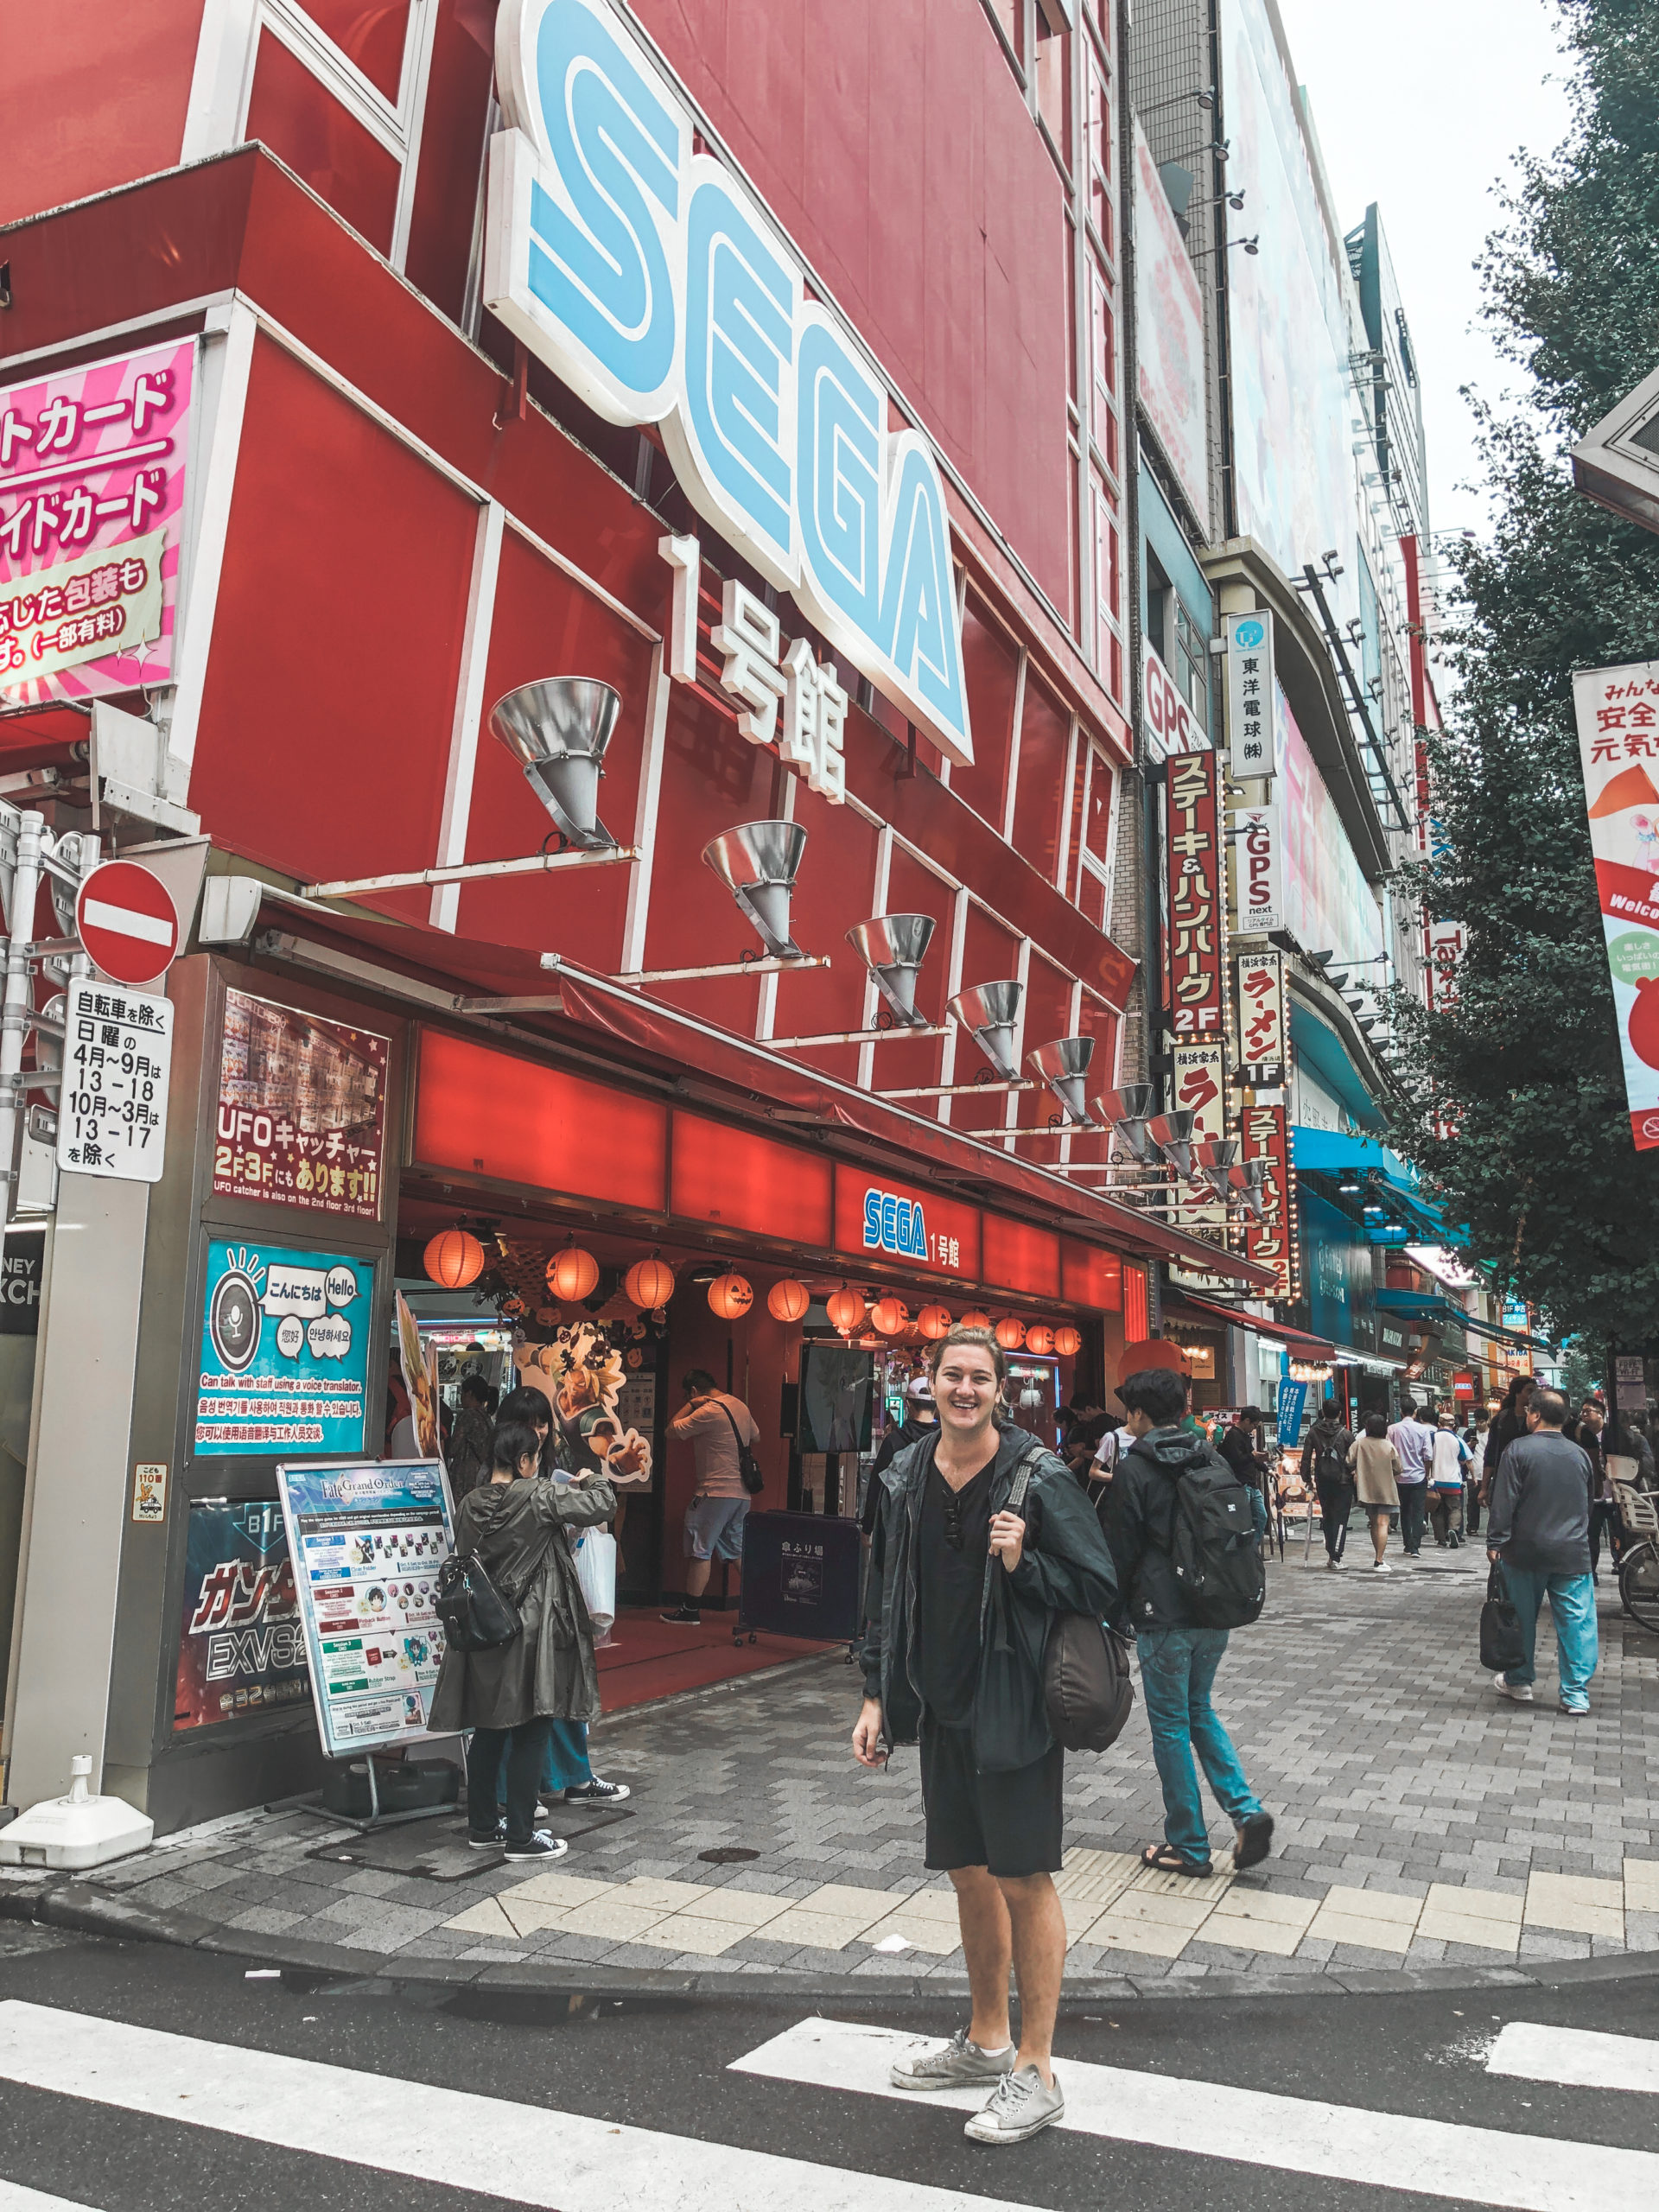 A Travel Guide To Tokyo - sega